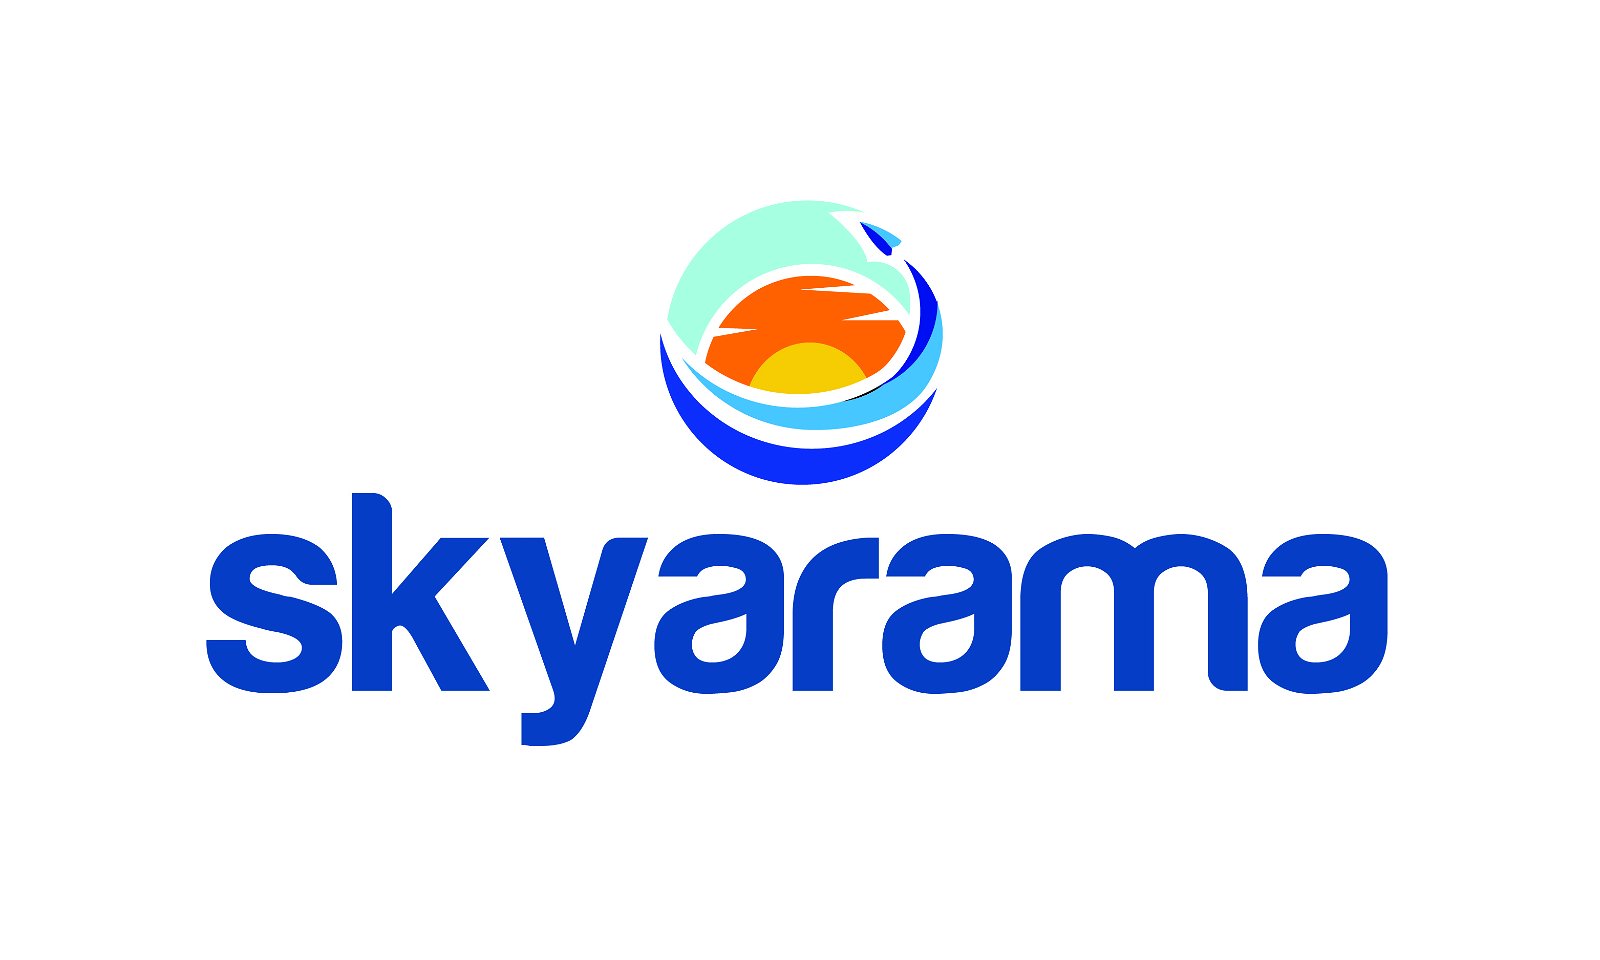 Skyarama.com - Creative brandable domain for sale